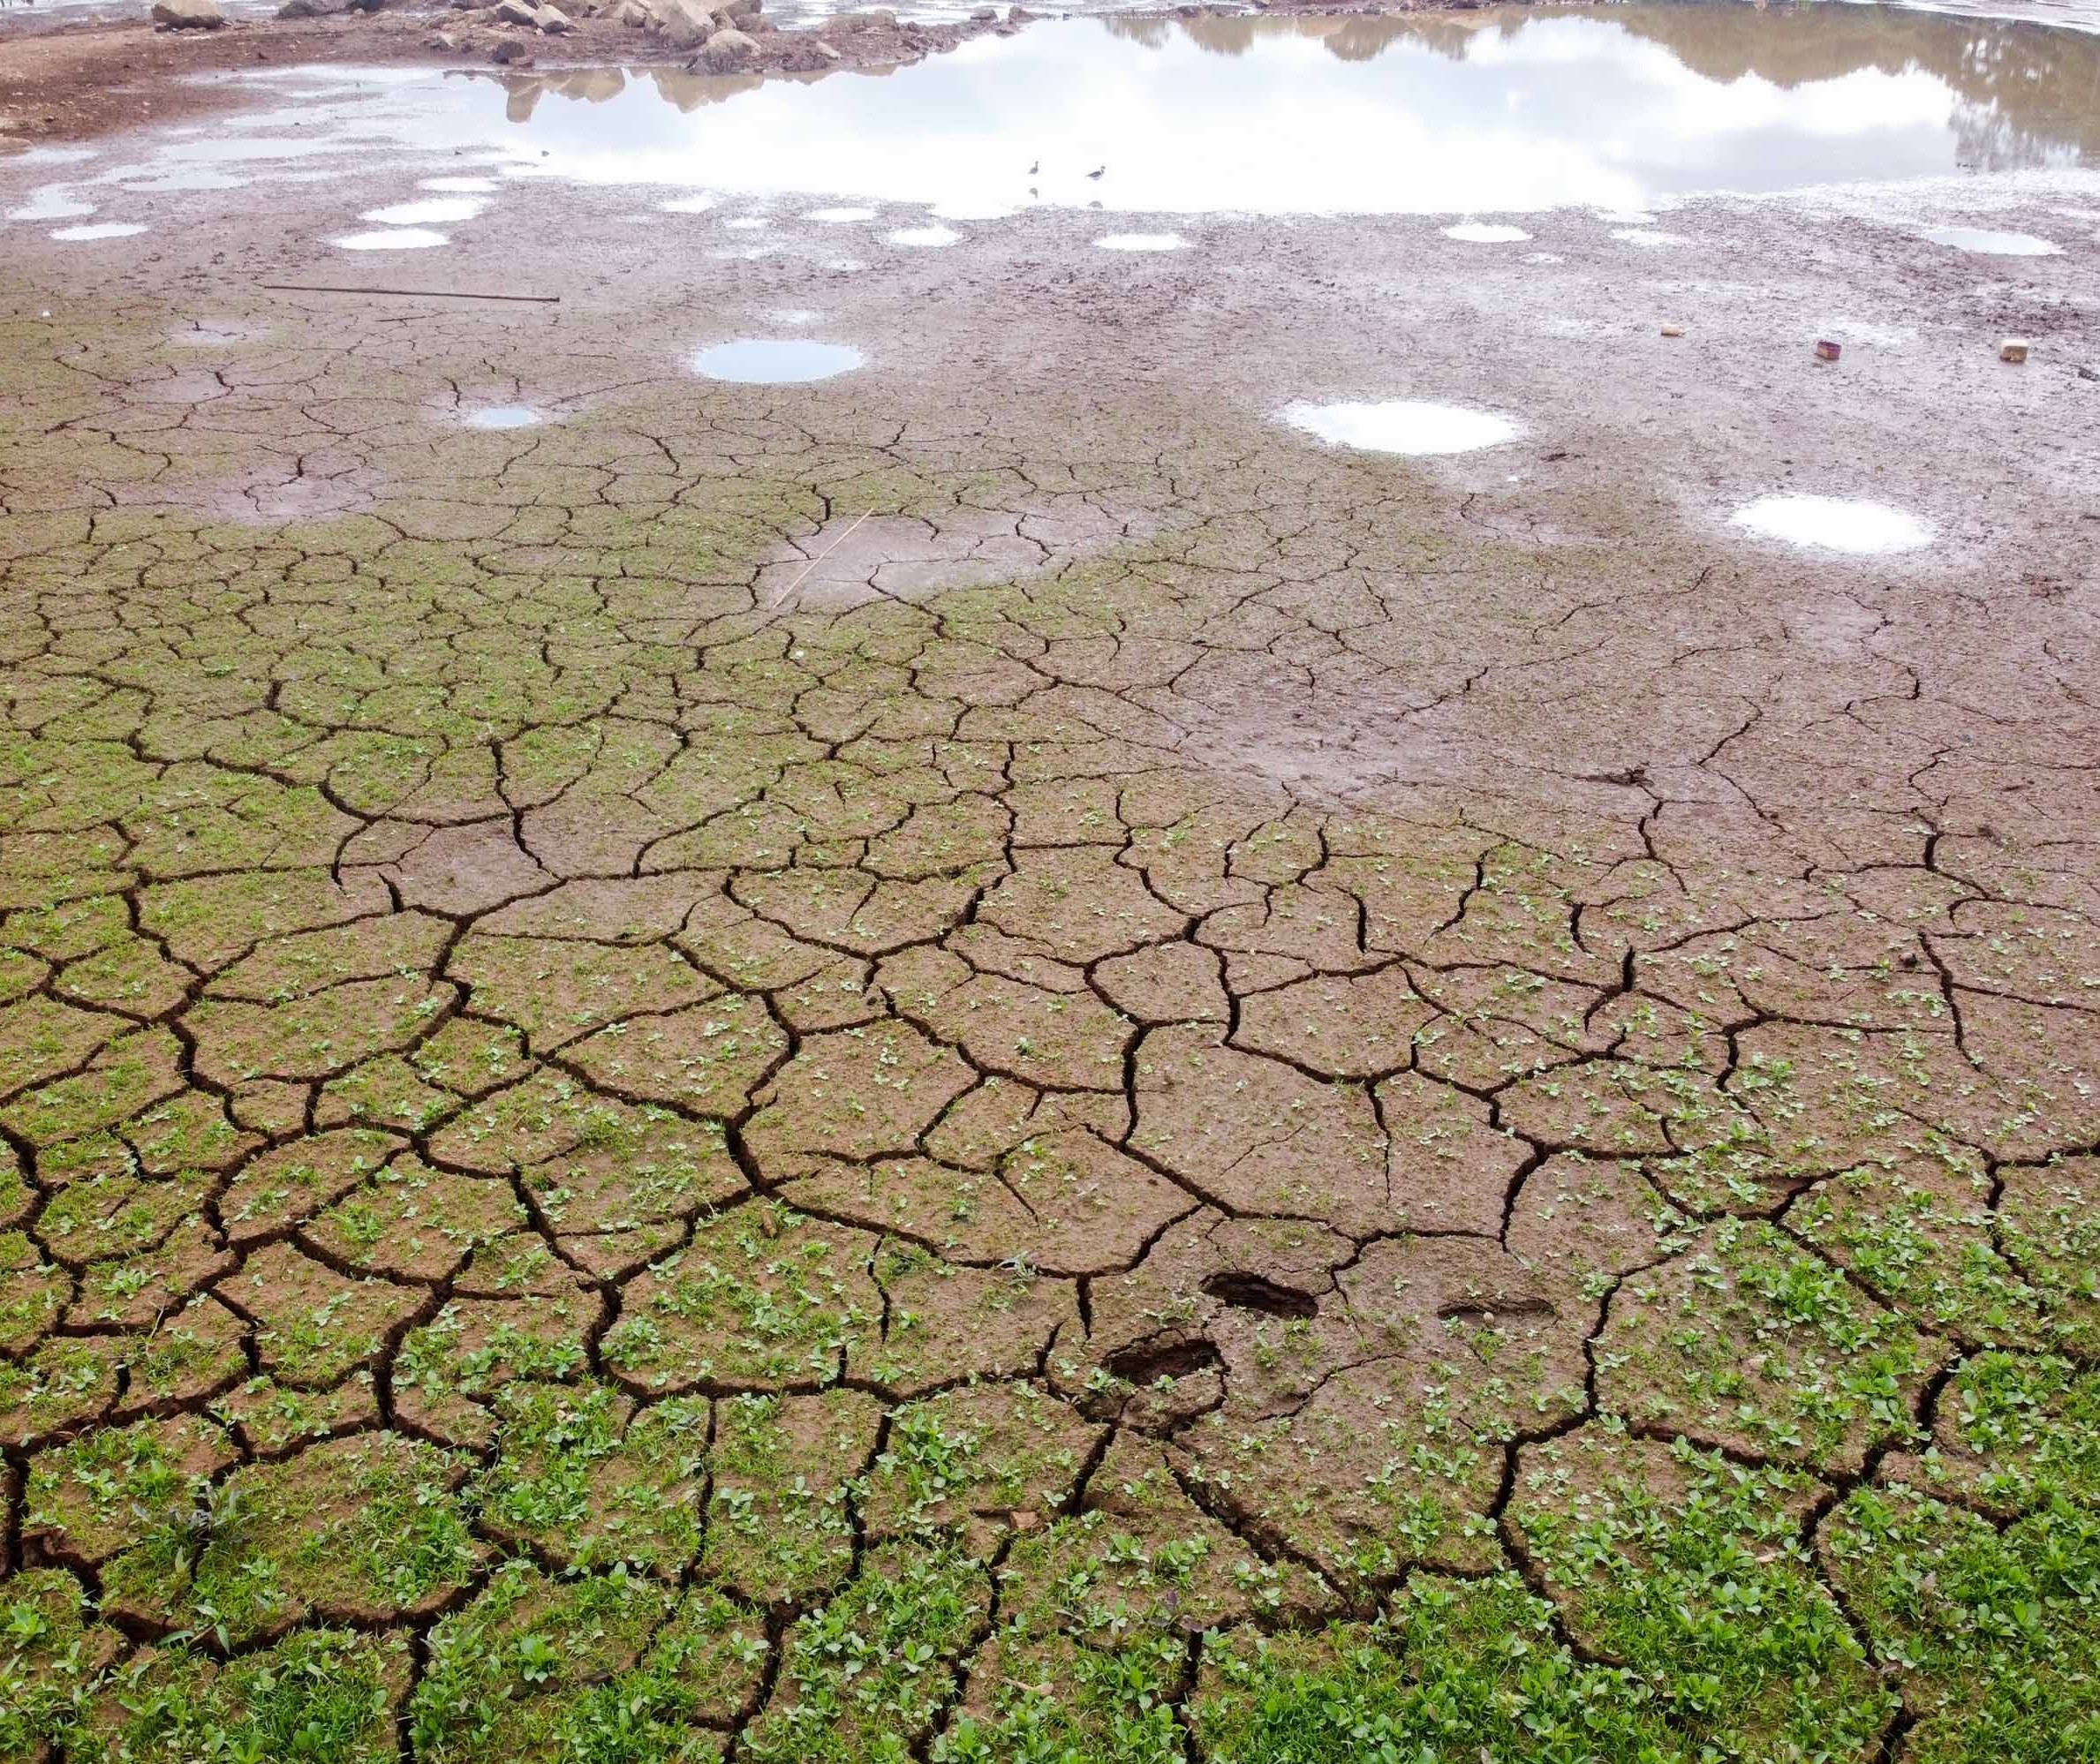 Crise hídrica amplia estimativa de perdas no setor agrícola